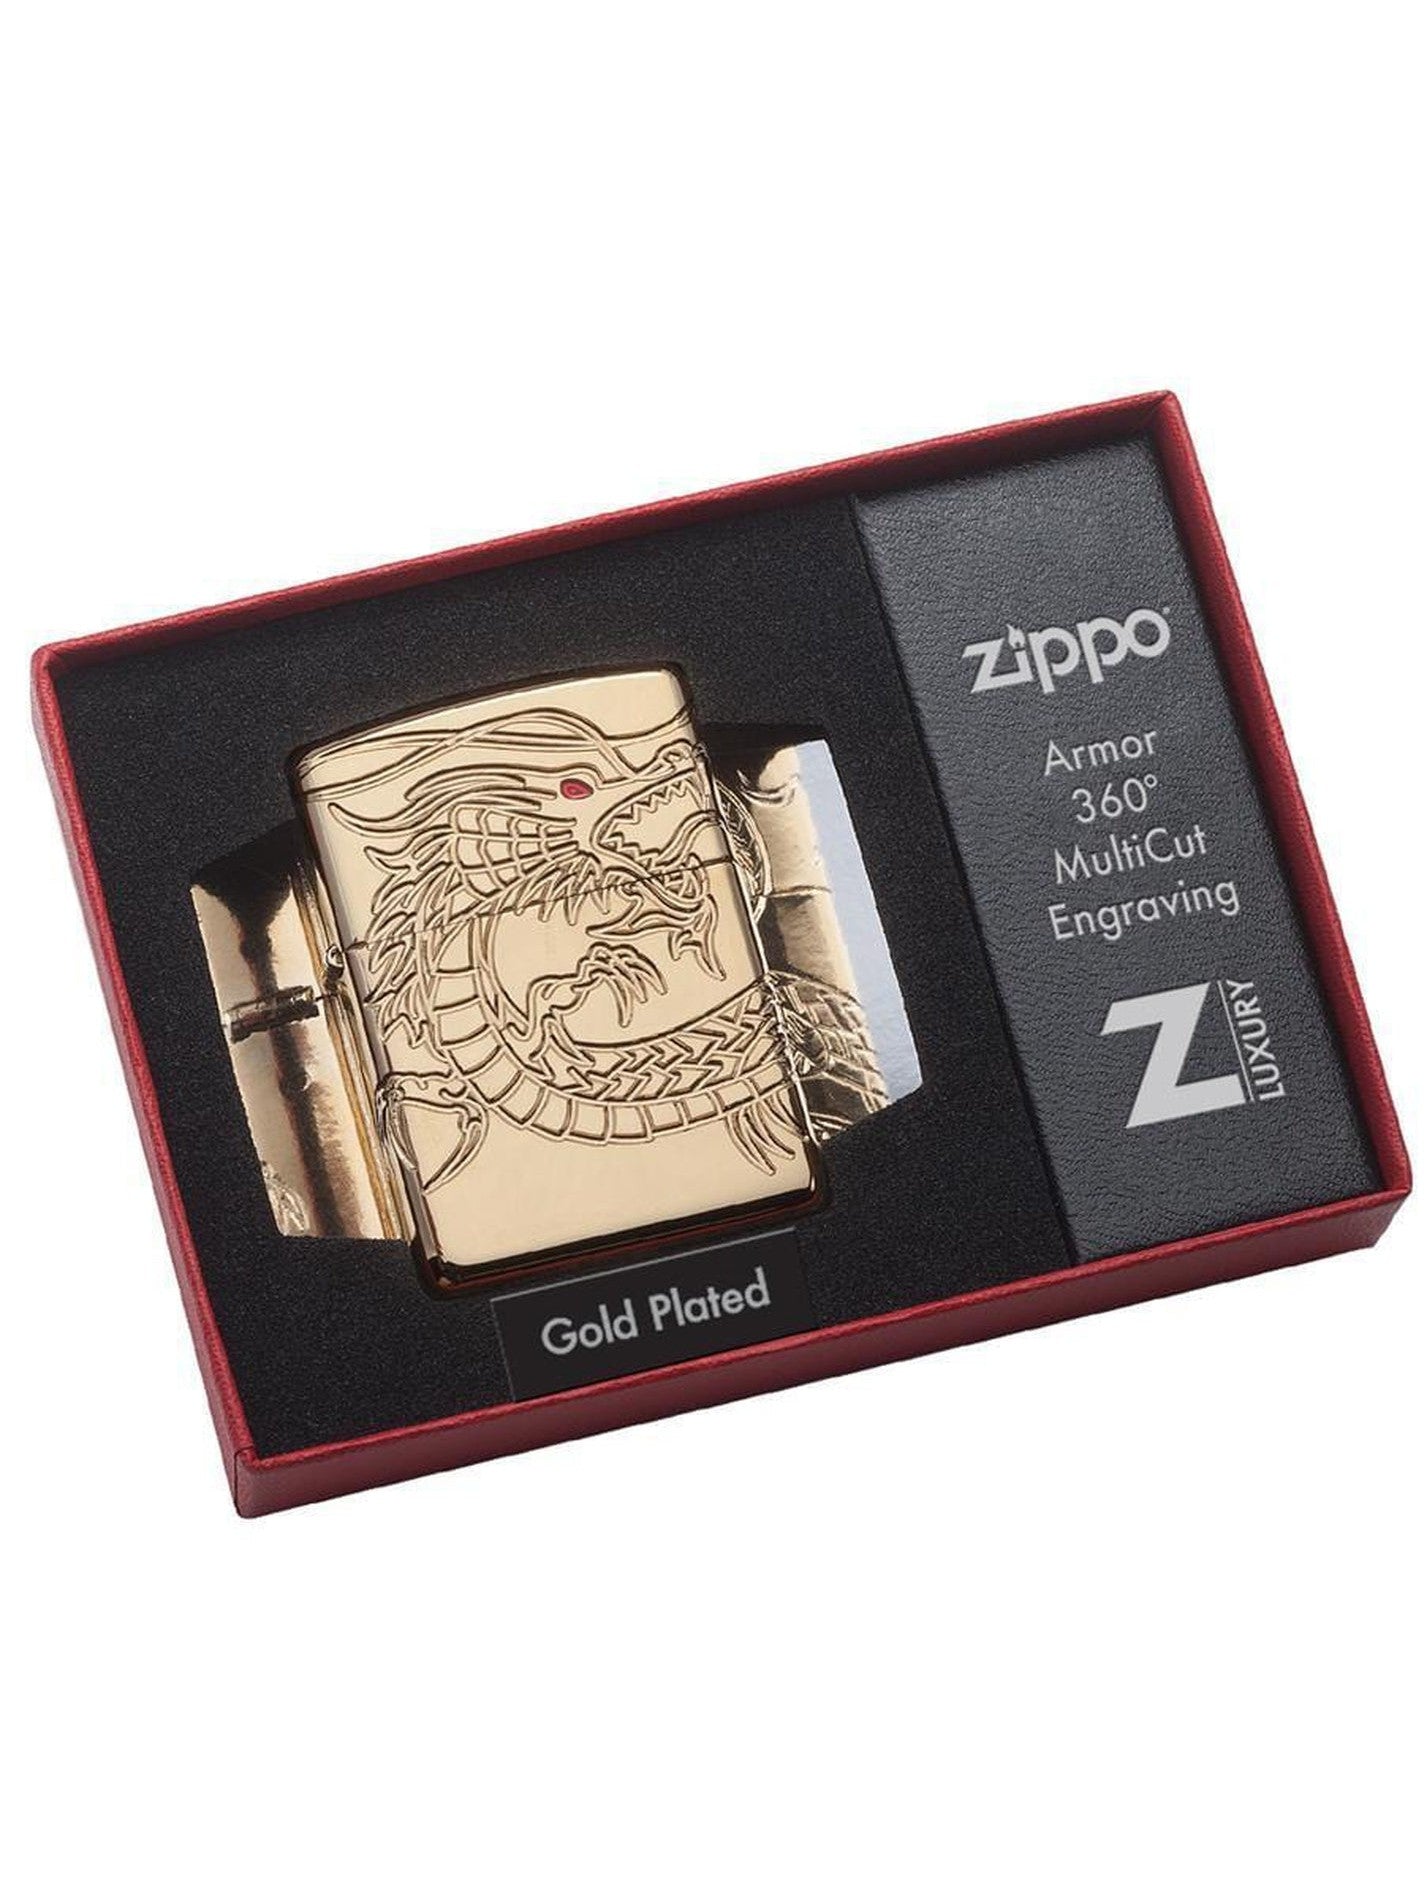 Zippo Lighter: Armor Multicut Dragon - High Polish Gold Plate 29265 - Gear Exec (1975535665267)